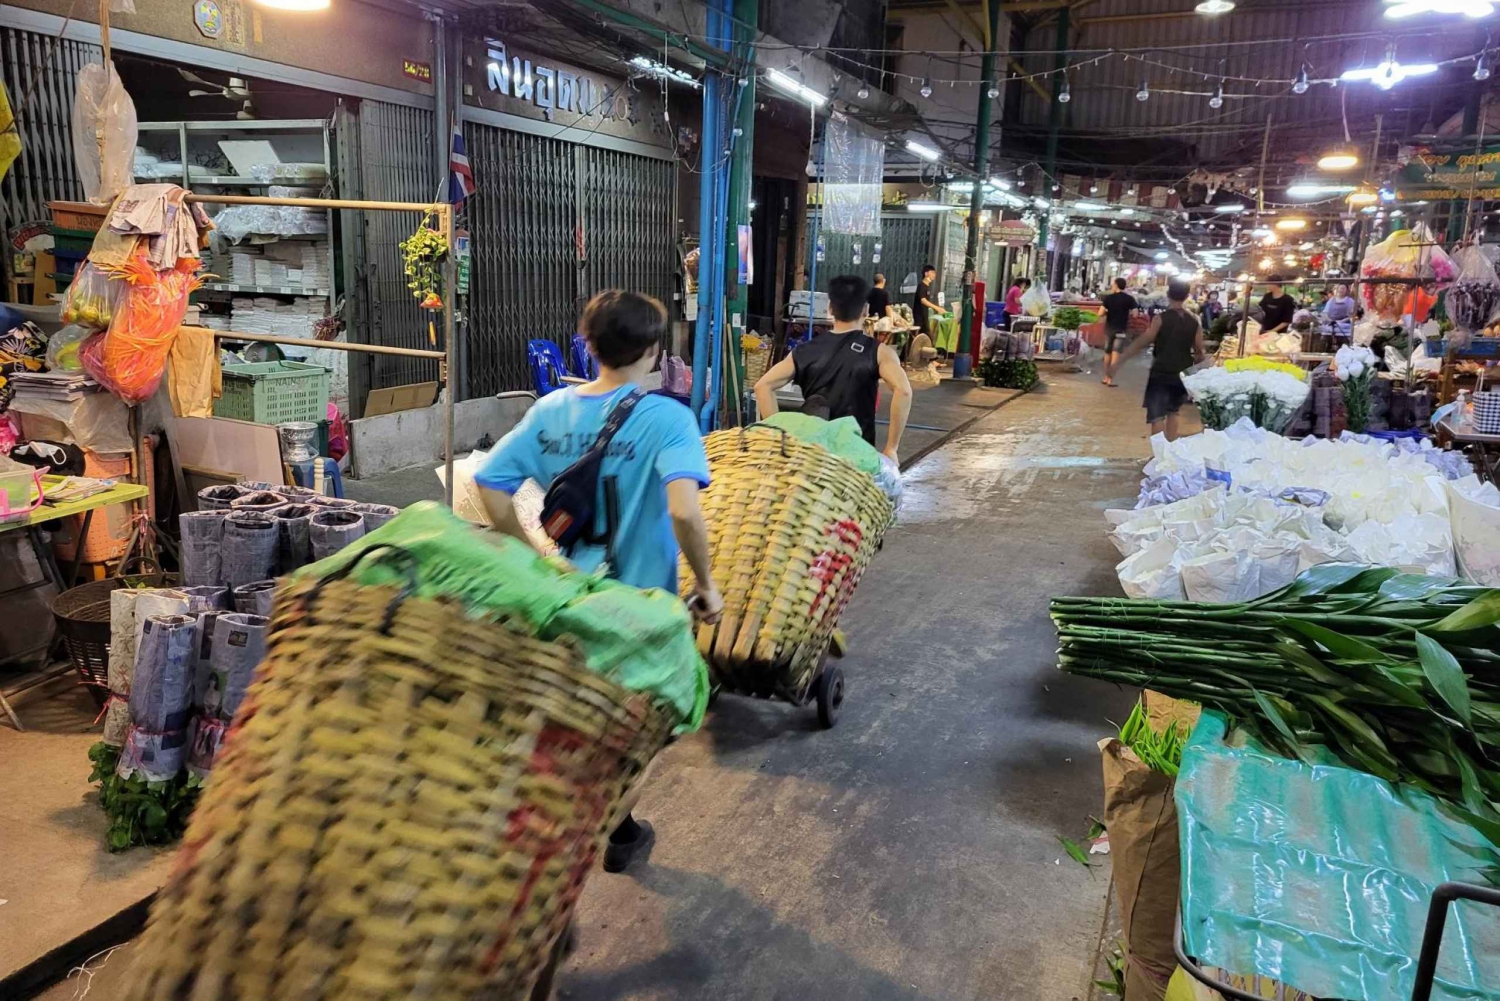 Bangkok: la passeggiata nella città vecchia